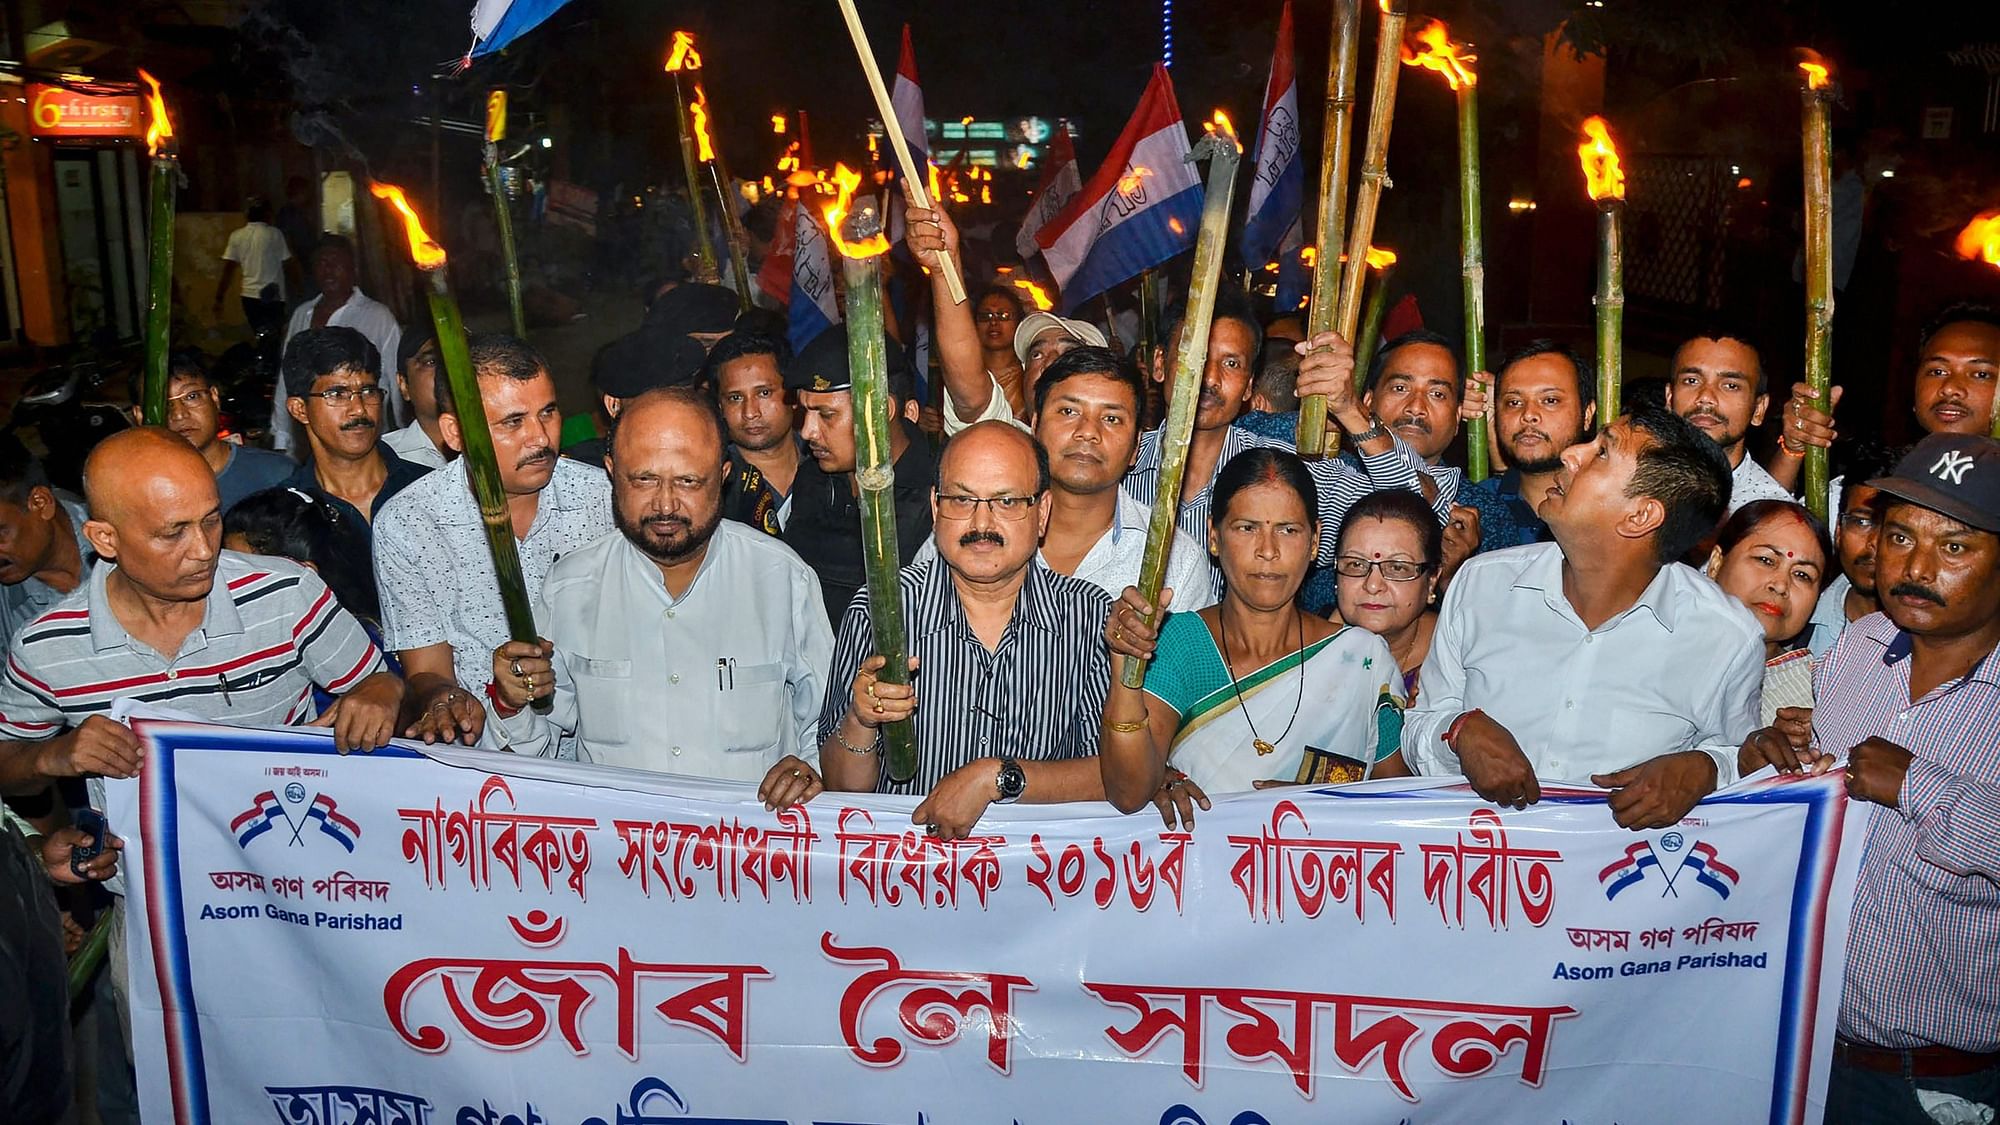 Activists of Asom Gana Parishad (AGP), led by former Assam CM Prafulla Kumar Mahanta, take out a torch light rally objecting the Citizenship (Amendment) Bill, in Guwahati.